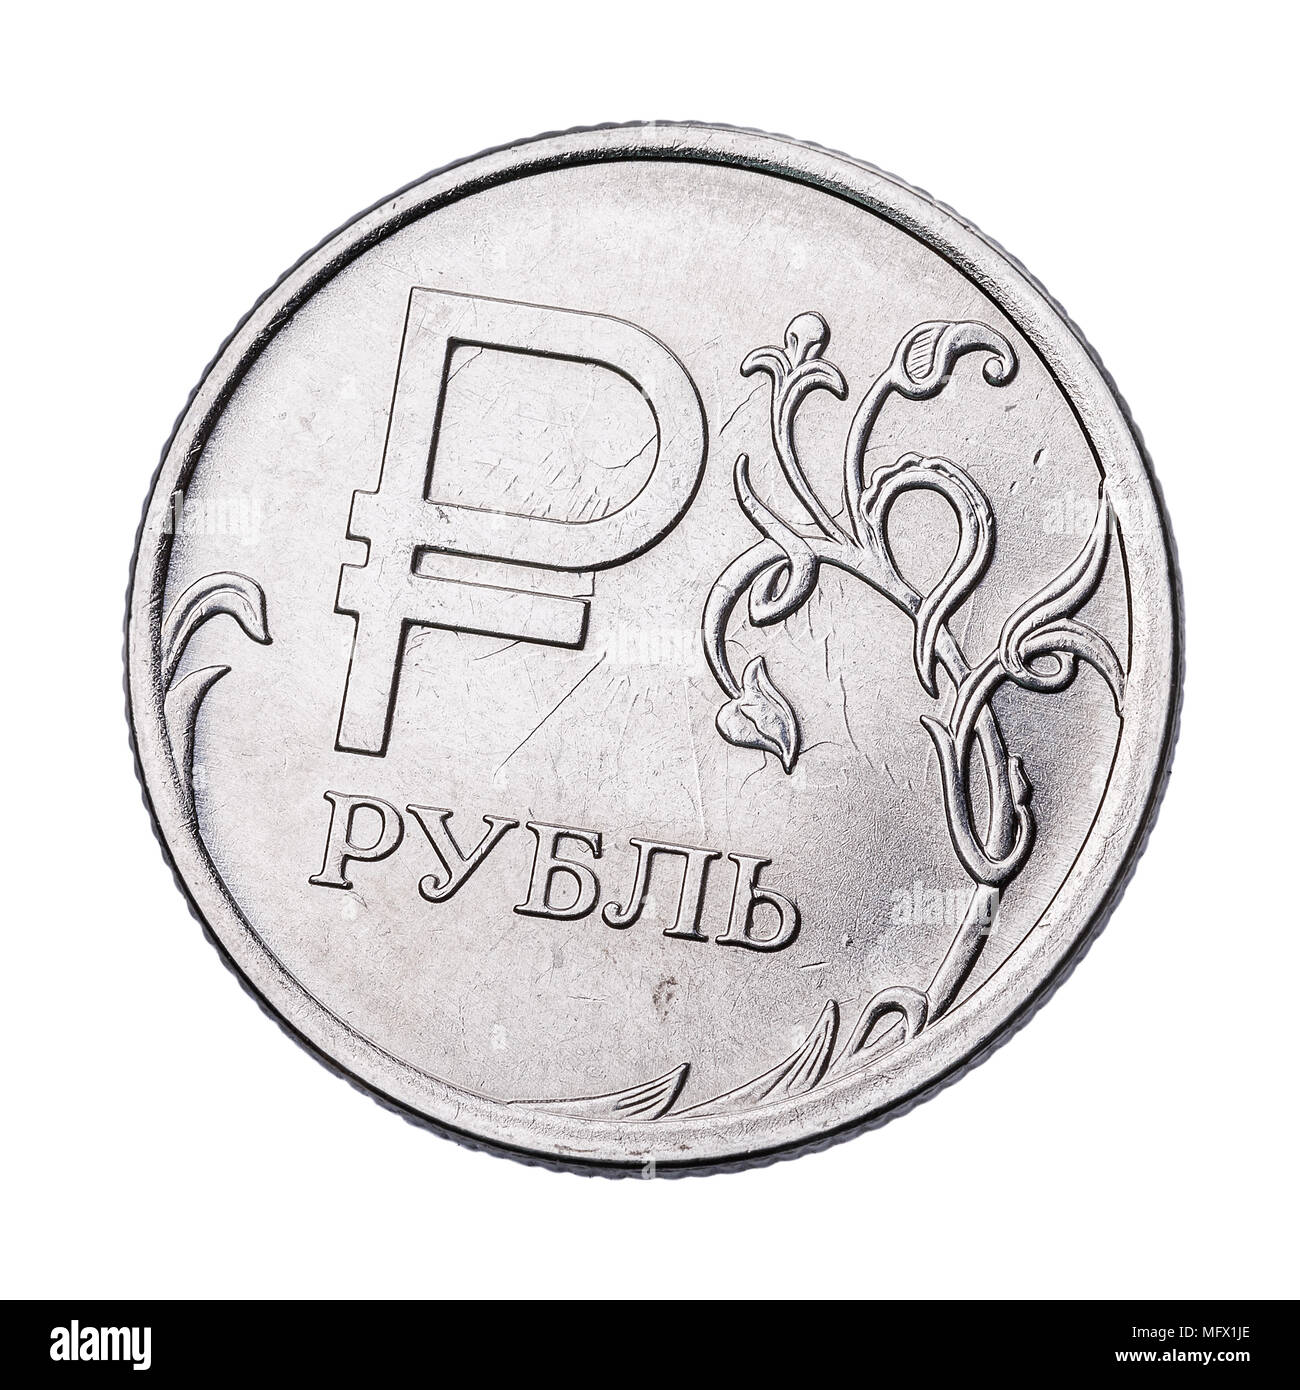 На рубле без руб. Монета 1 рубль на белом фоне. Монета 1 рубль на прозрачном фоне. Рубли без фона. Монеты рубли на прозрачном фоне.